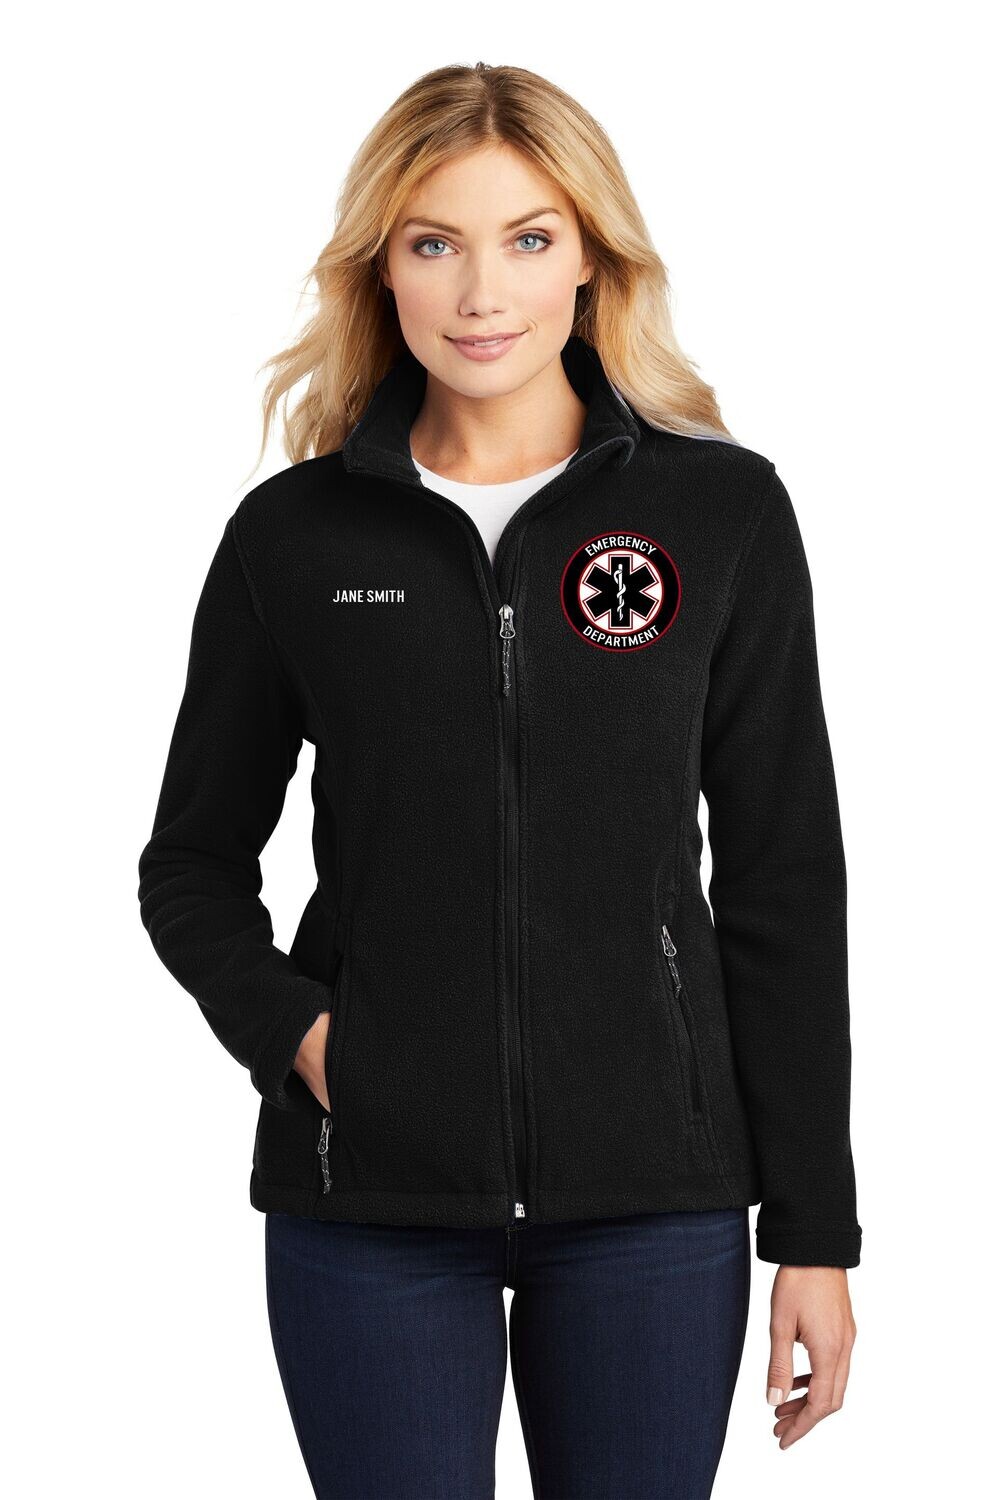 Emergency Department- Ladies Value Fleece Jacket